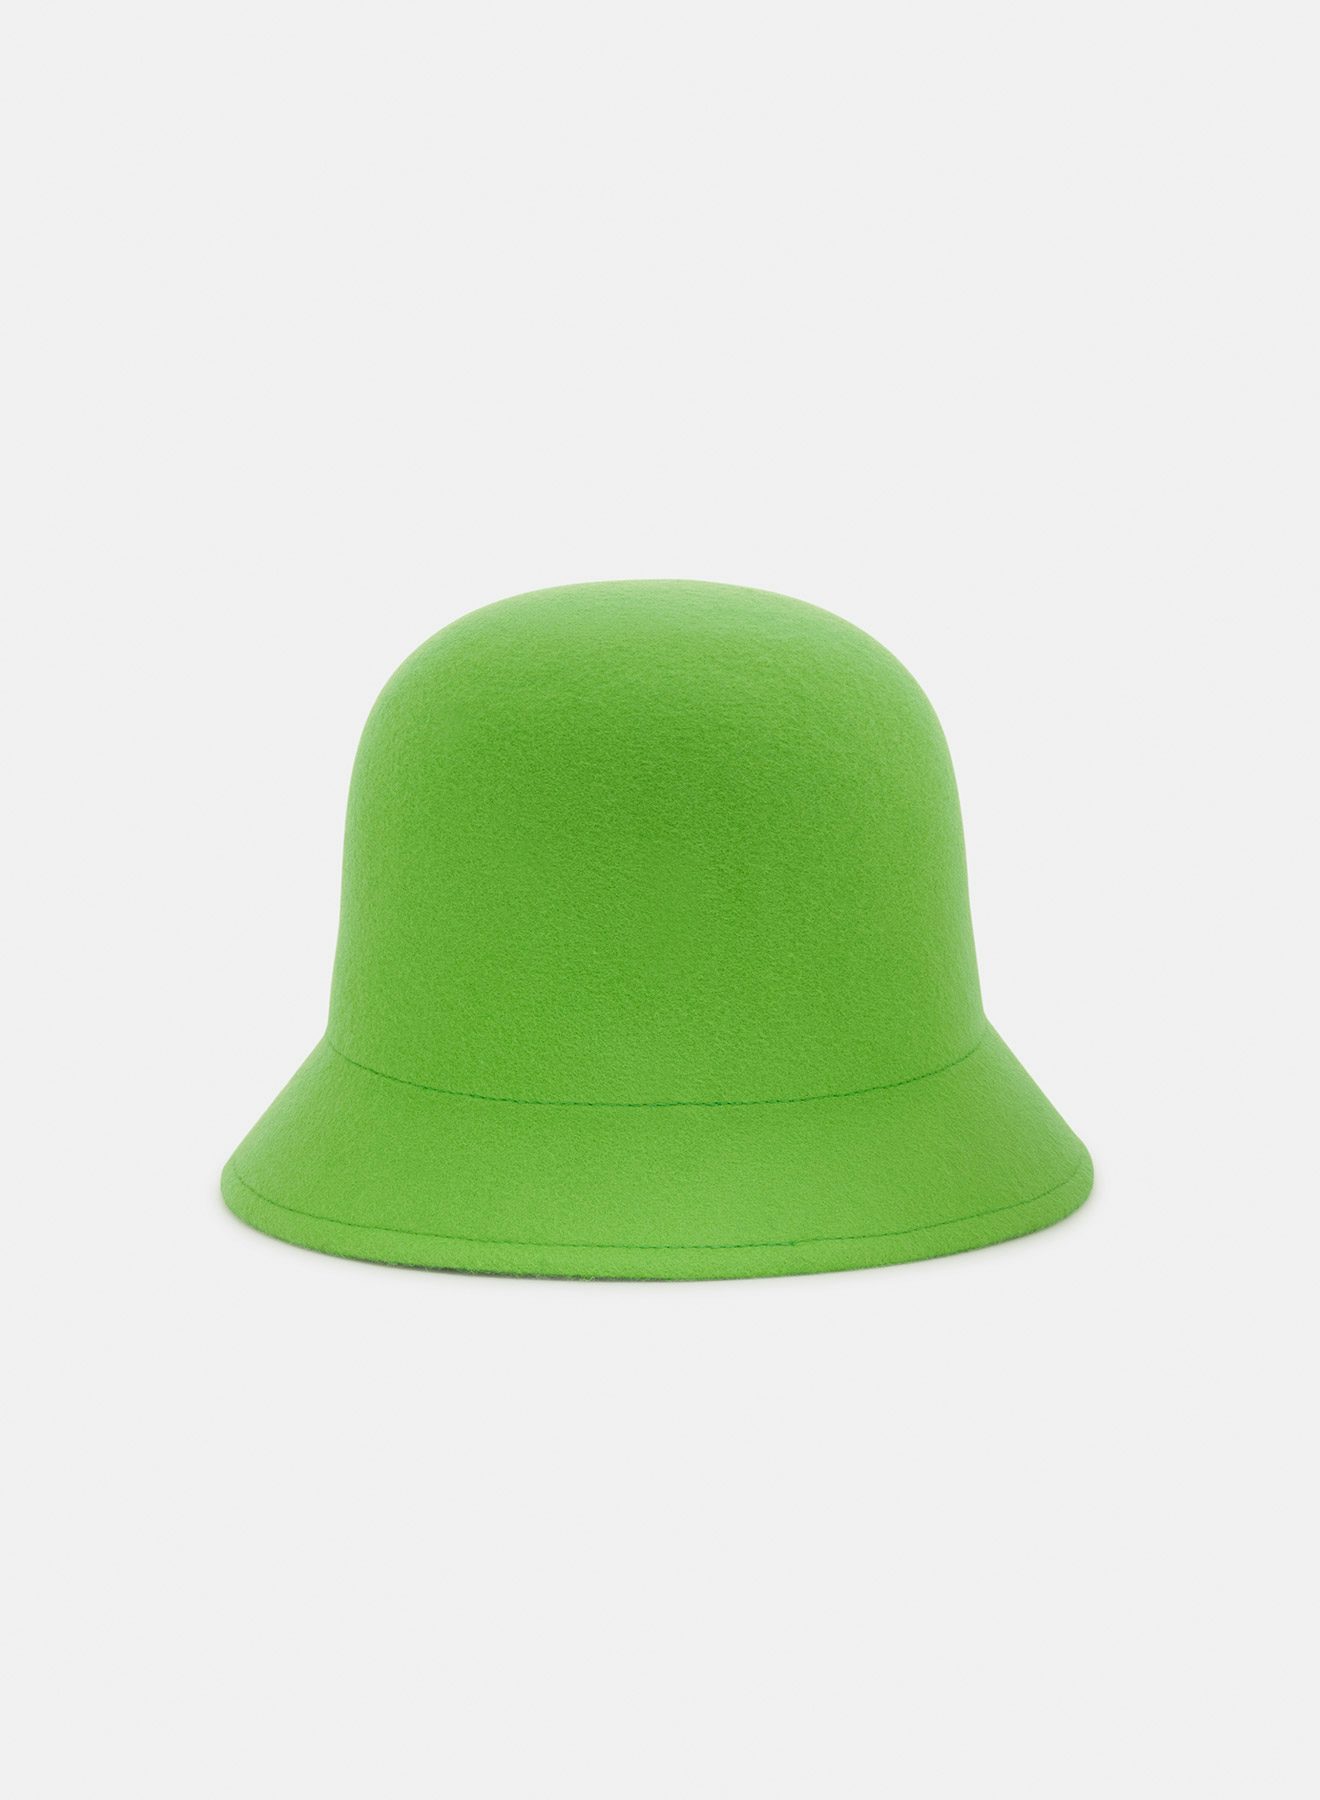 Felted wool hat green - Nina Ricci